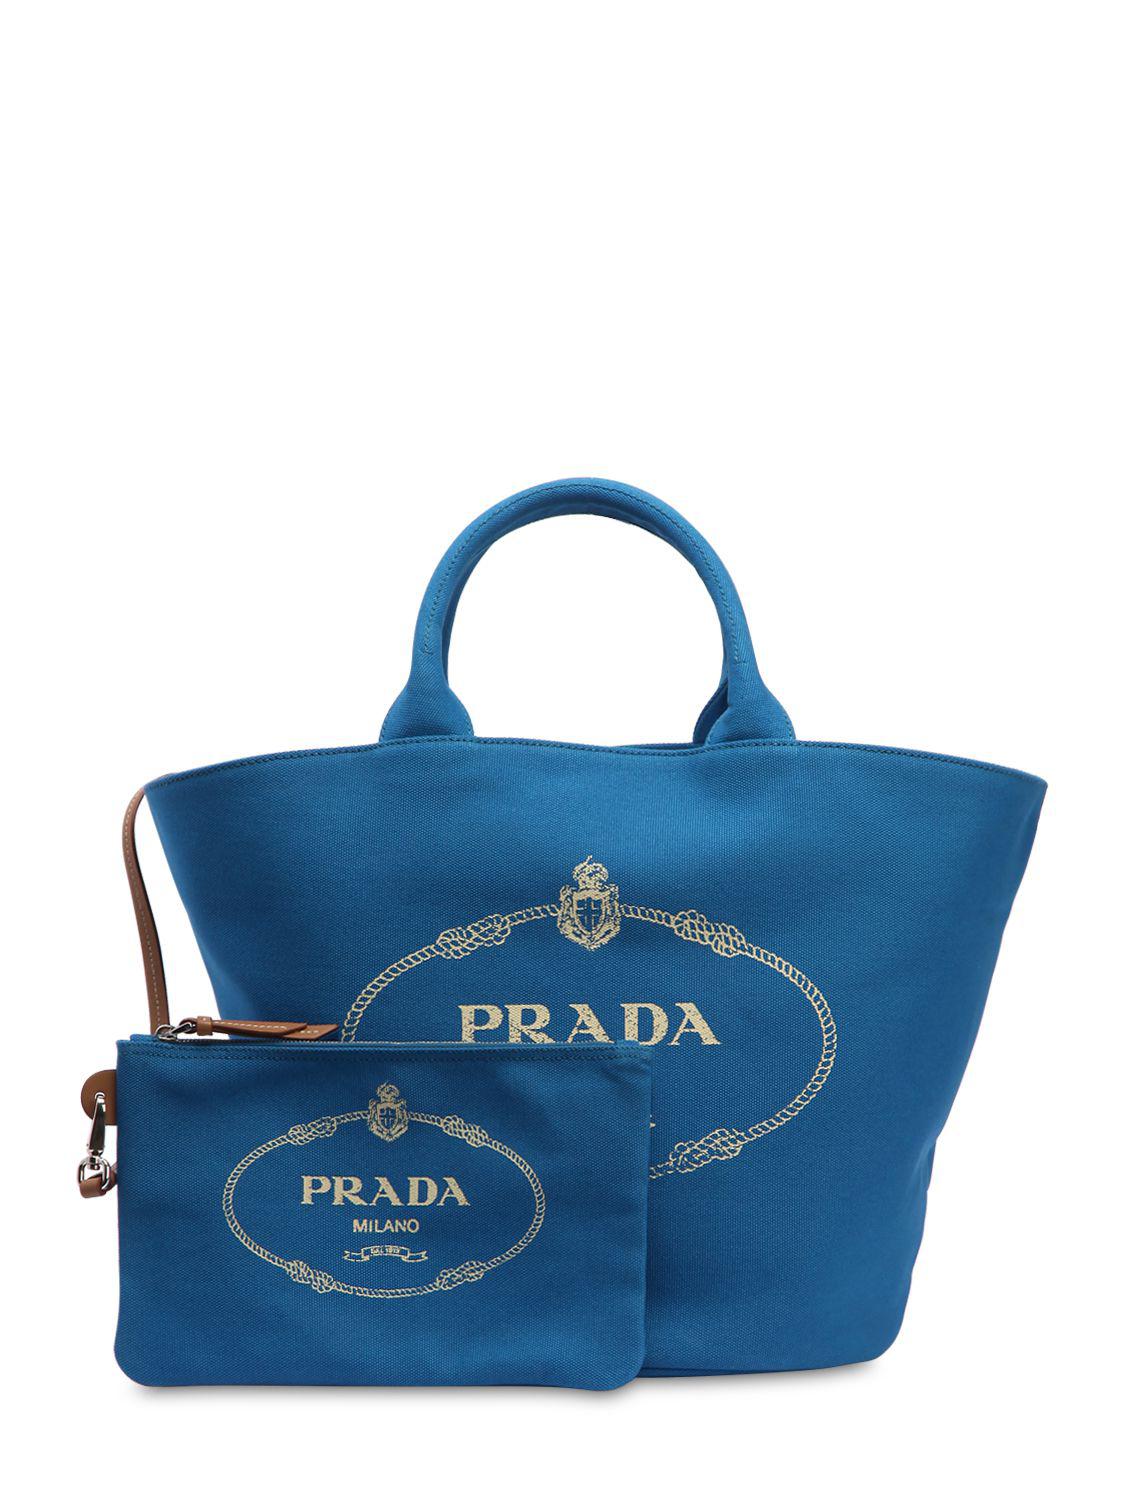 Prada Logo Printed Cotton Canvas Tote Bag in Blue - Lyst